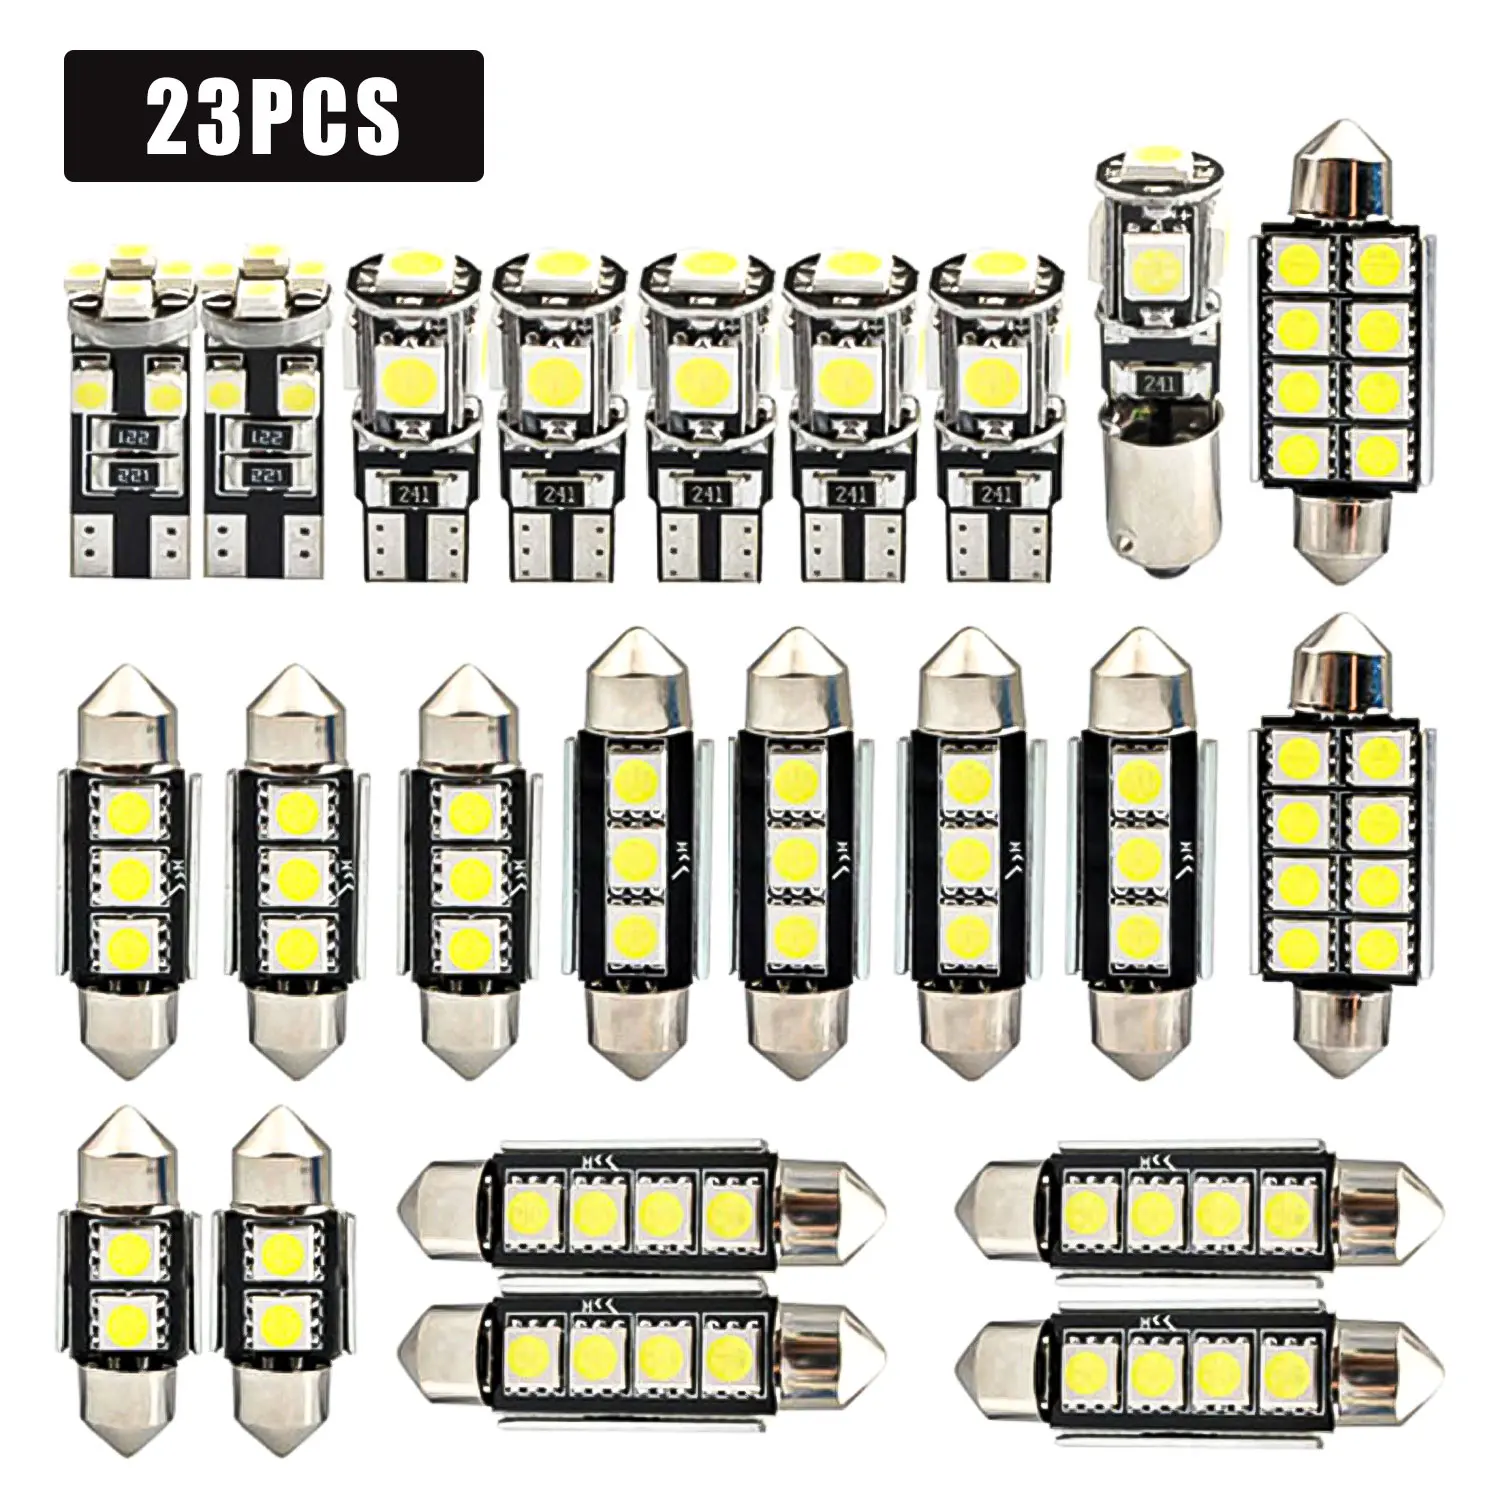 

23Pcs 12V 194, T10, W5W, 31MM, C5W LED Car Light Bulbs Interior Map Dome Reading Lamp Trunk License Plate White Lamps Kit